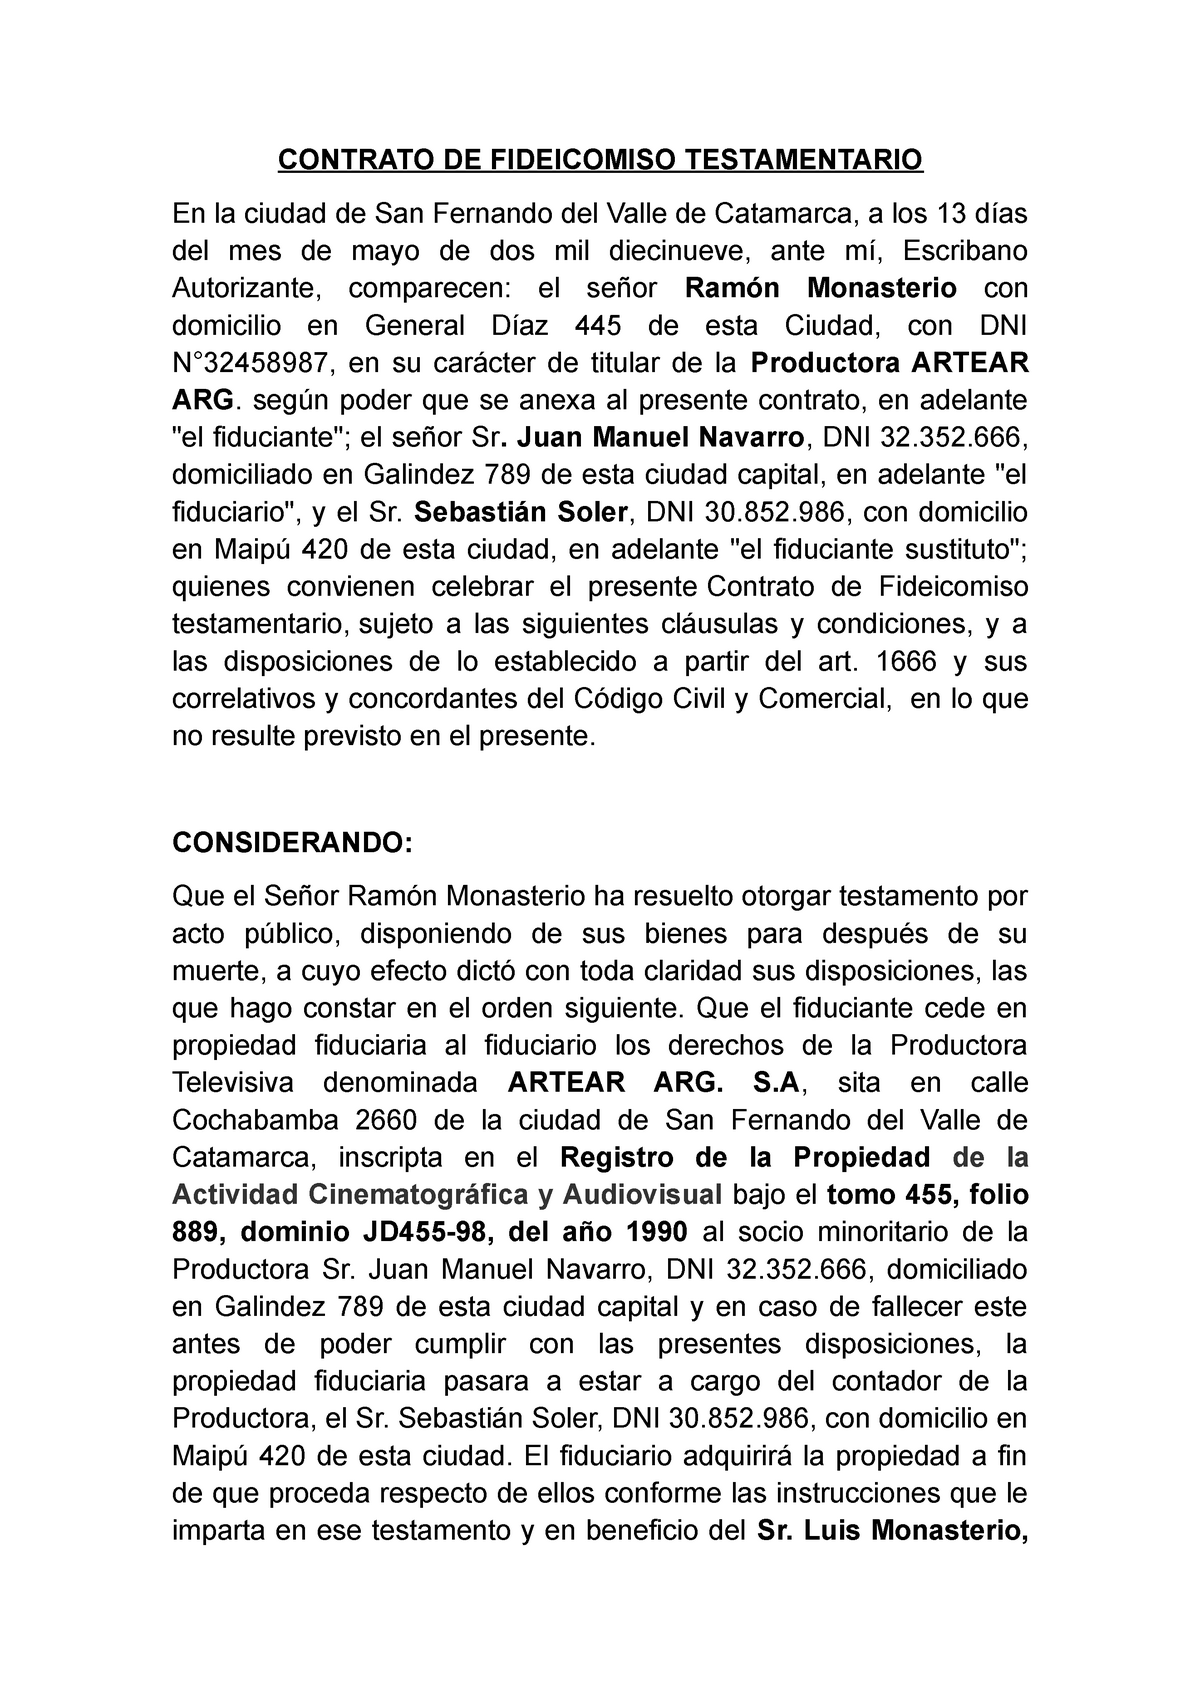 Fideicomiso Testamentario 1 - CONTRATO DE FIDEICOMISO TESTAMENTARIO En la  ciudad de San Fernando del - Studocu